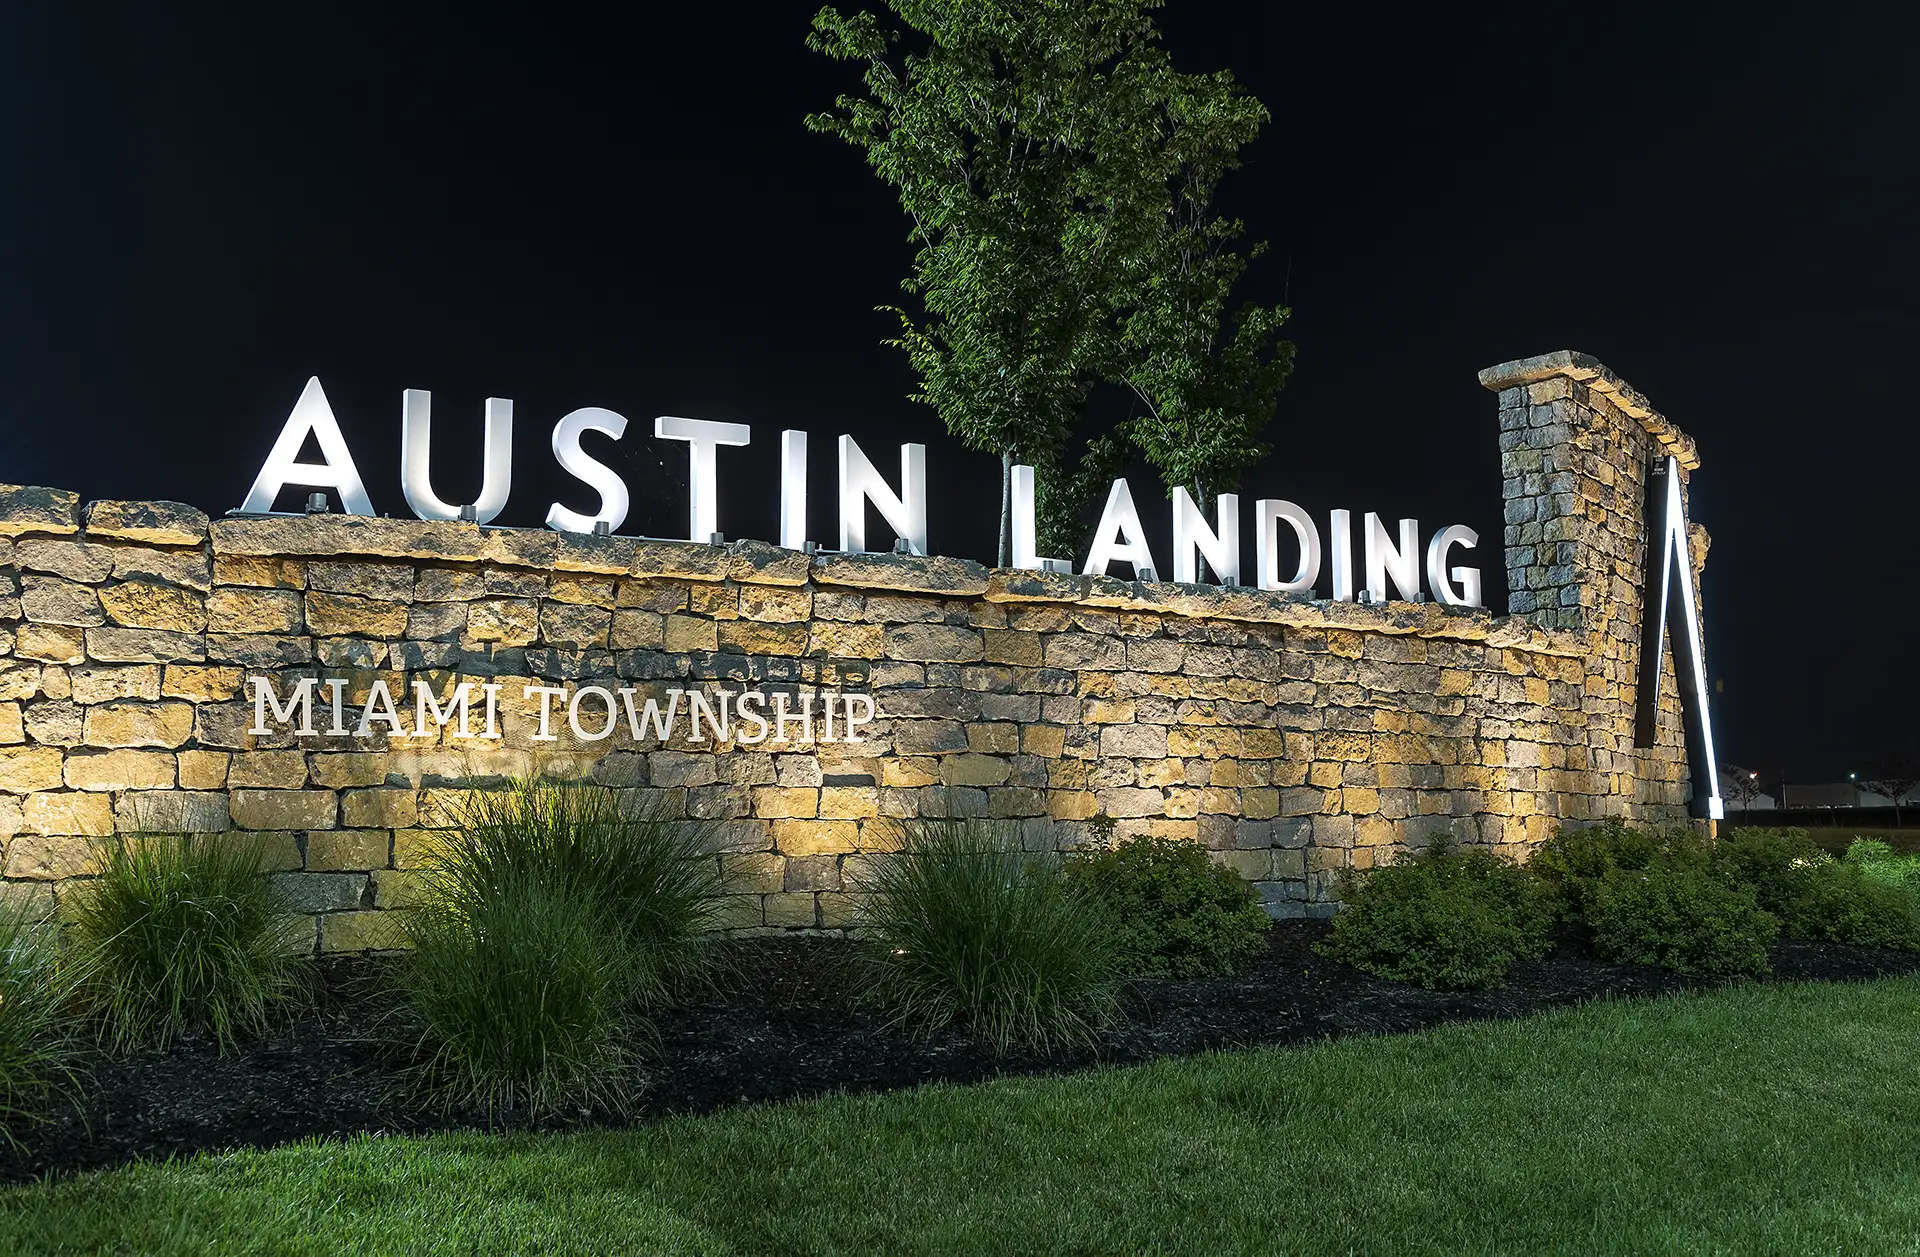 Austin Landing image 8 signage angled landscape commercial outdoor lighting Lighthouse Design Studio Miamisburg OH